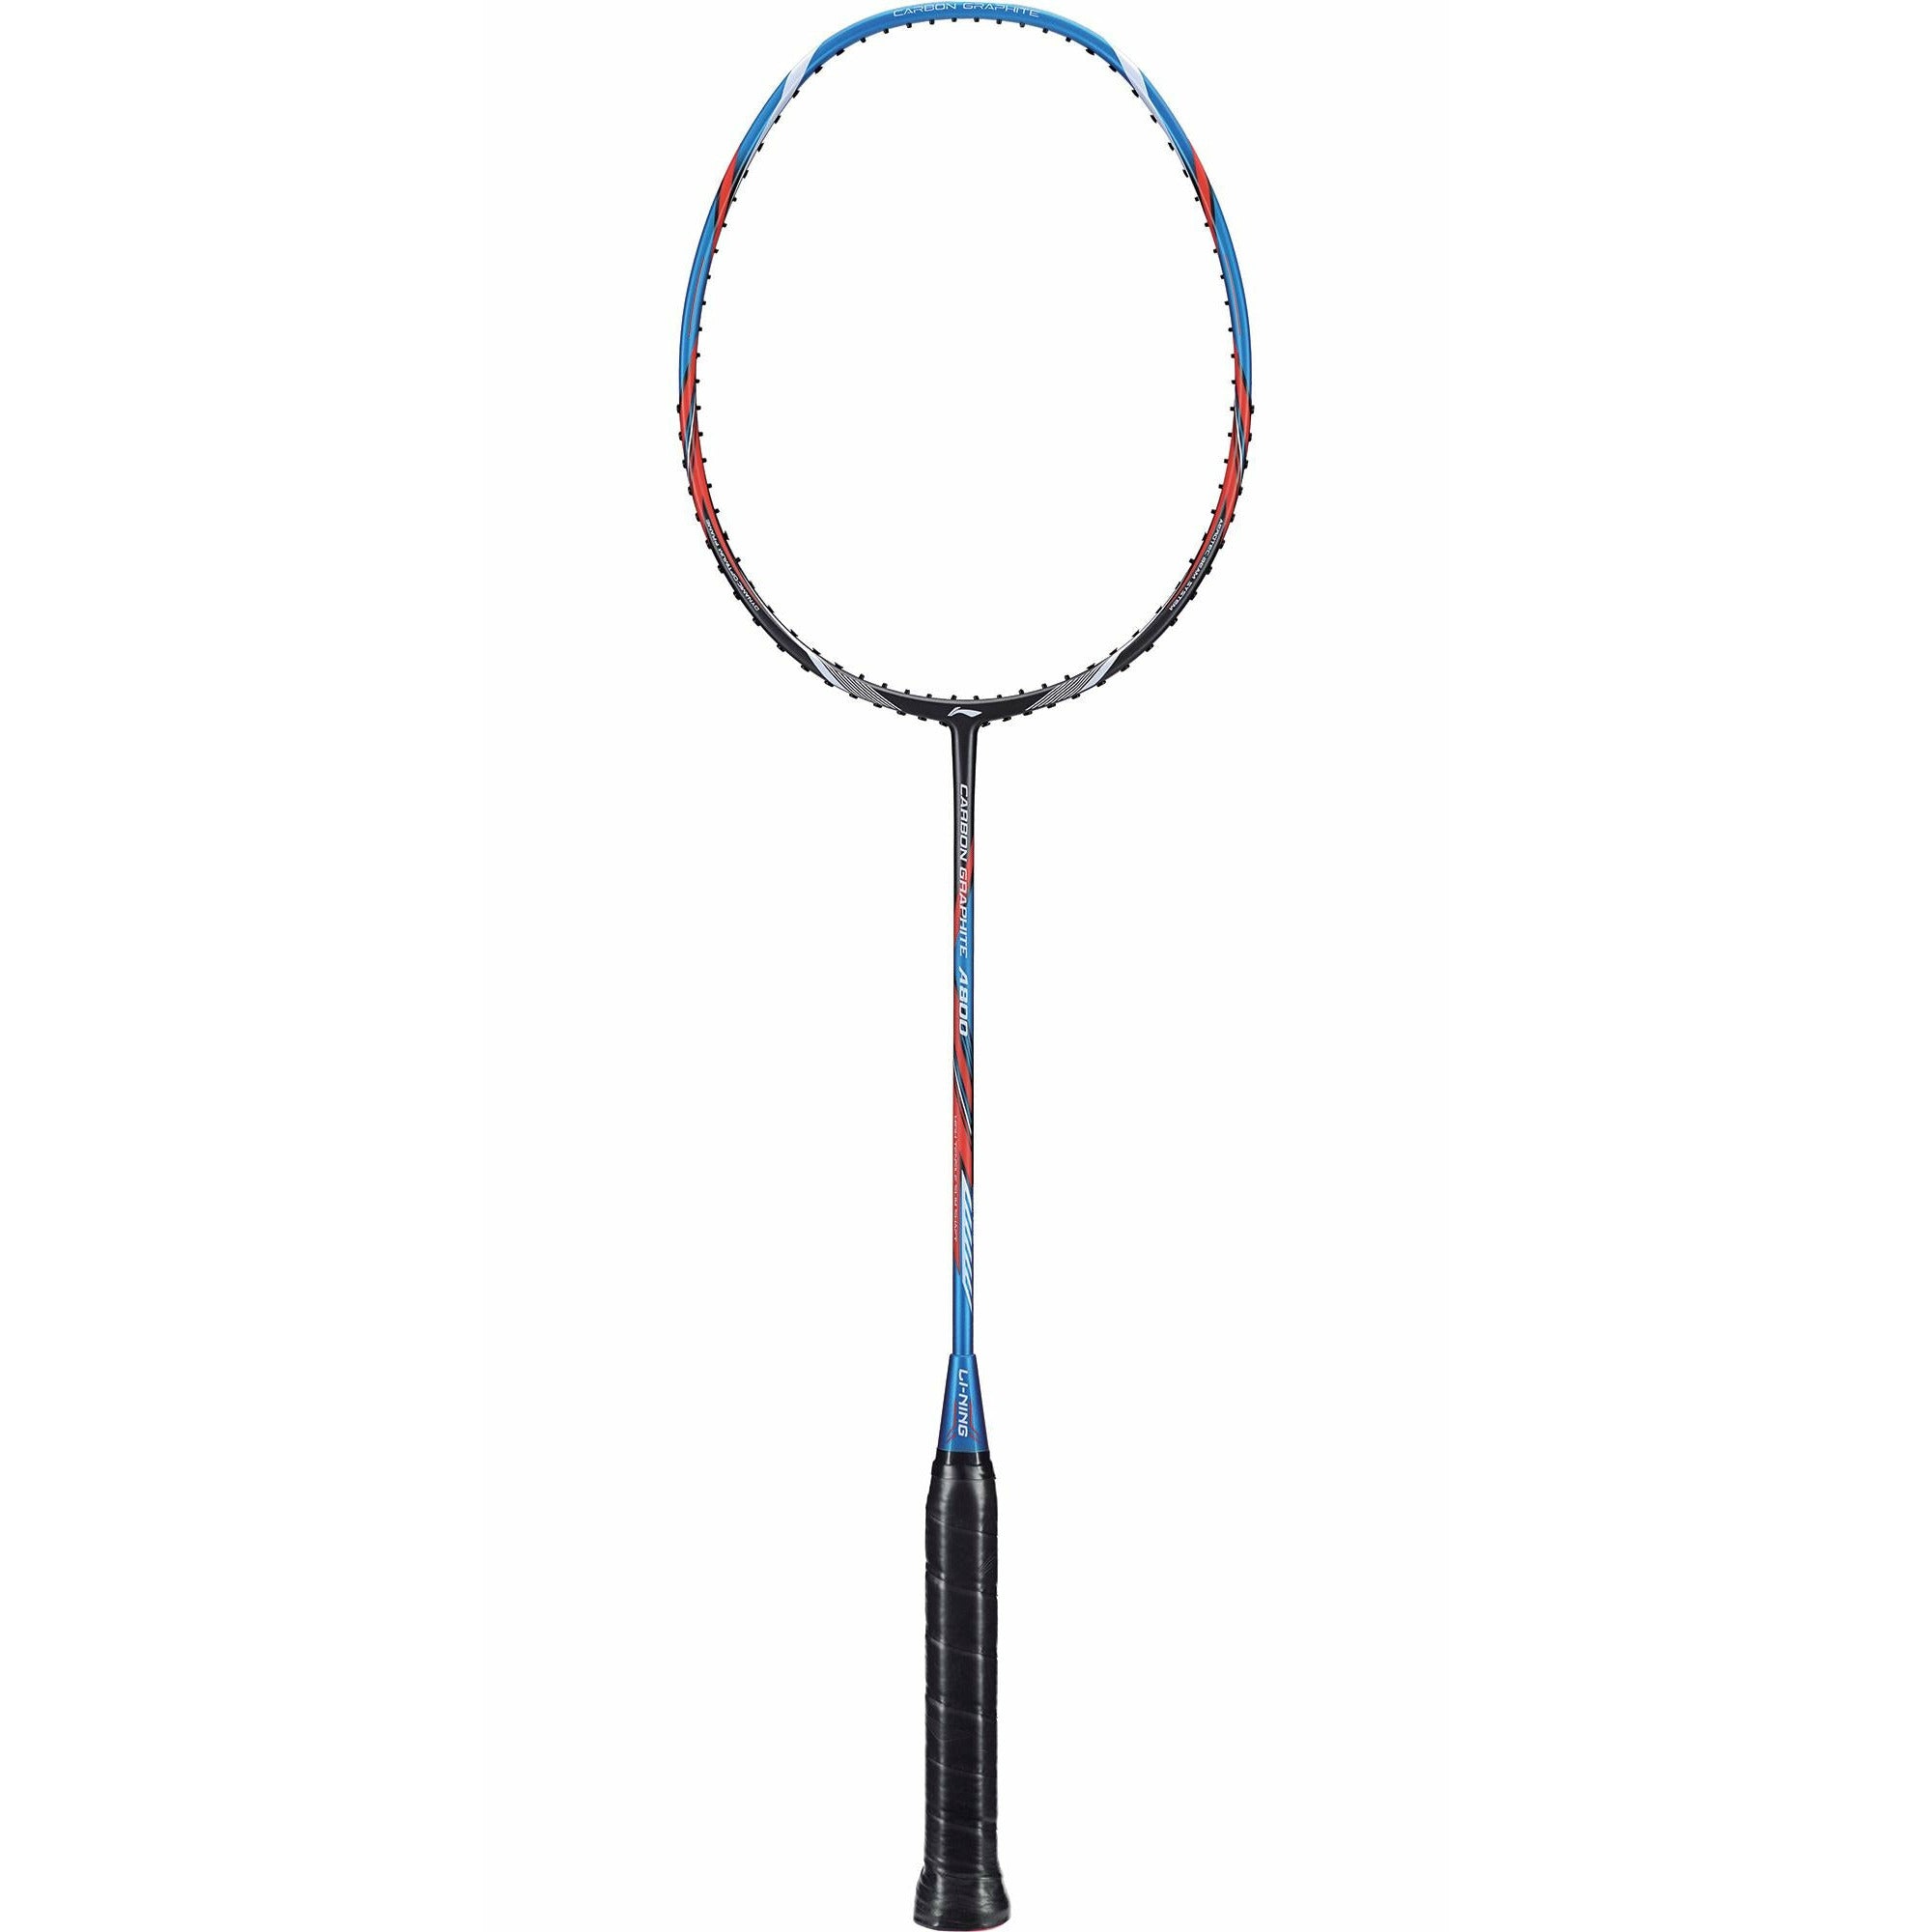 Li-Ning A800 Badminton Racket [Strung]